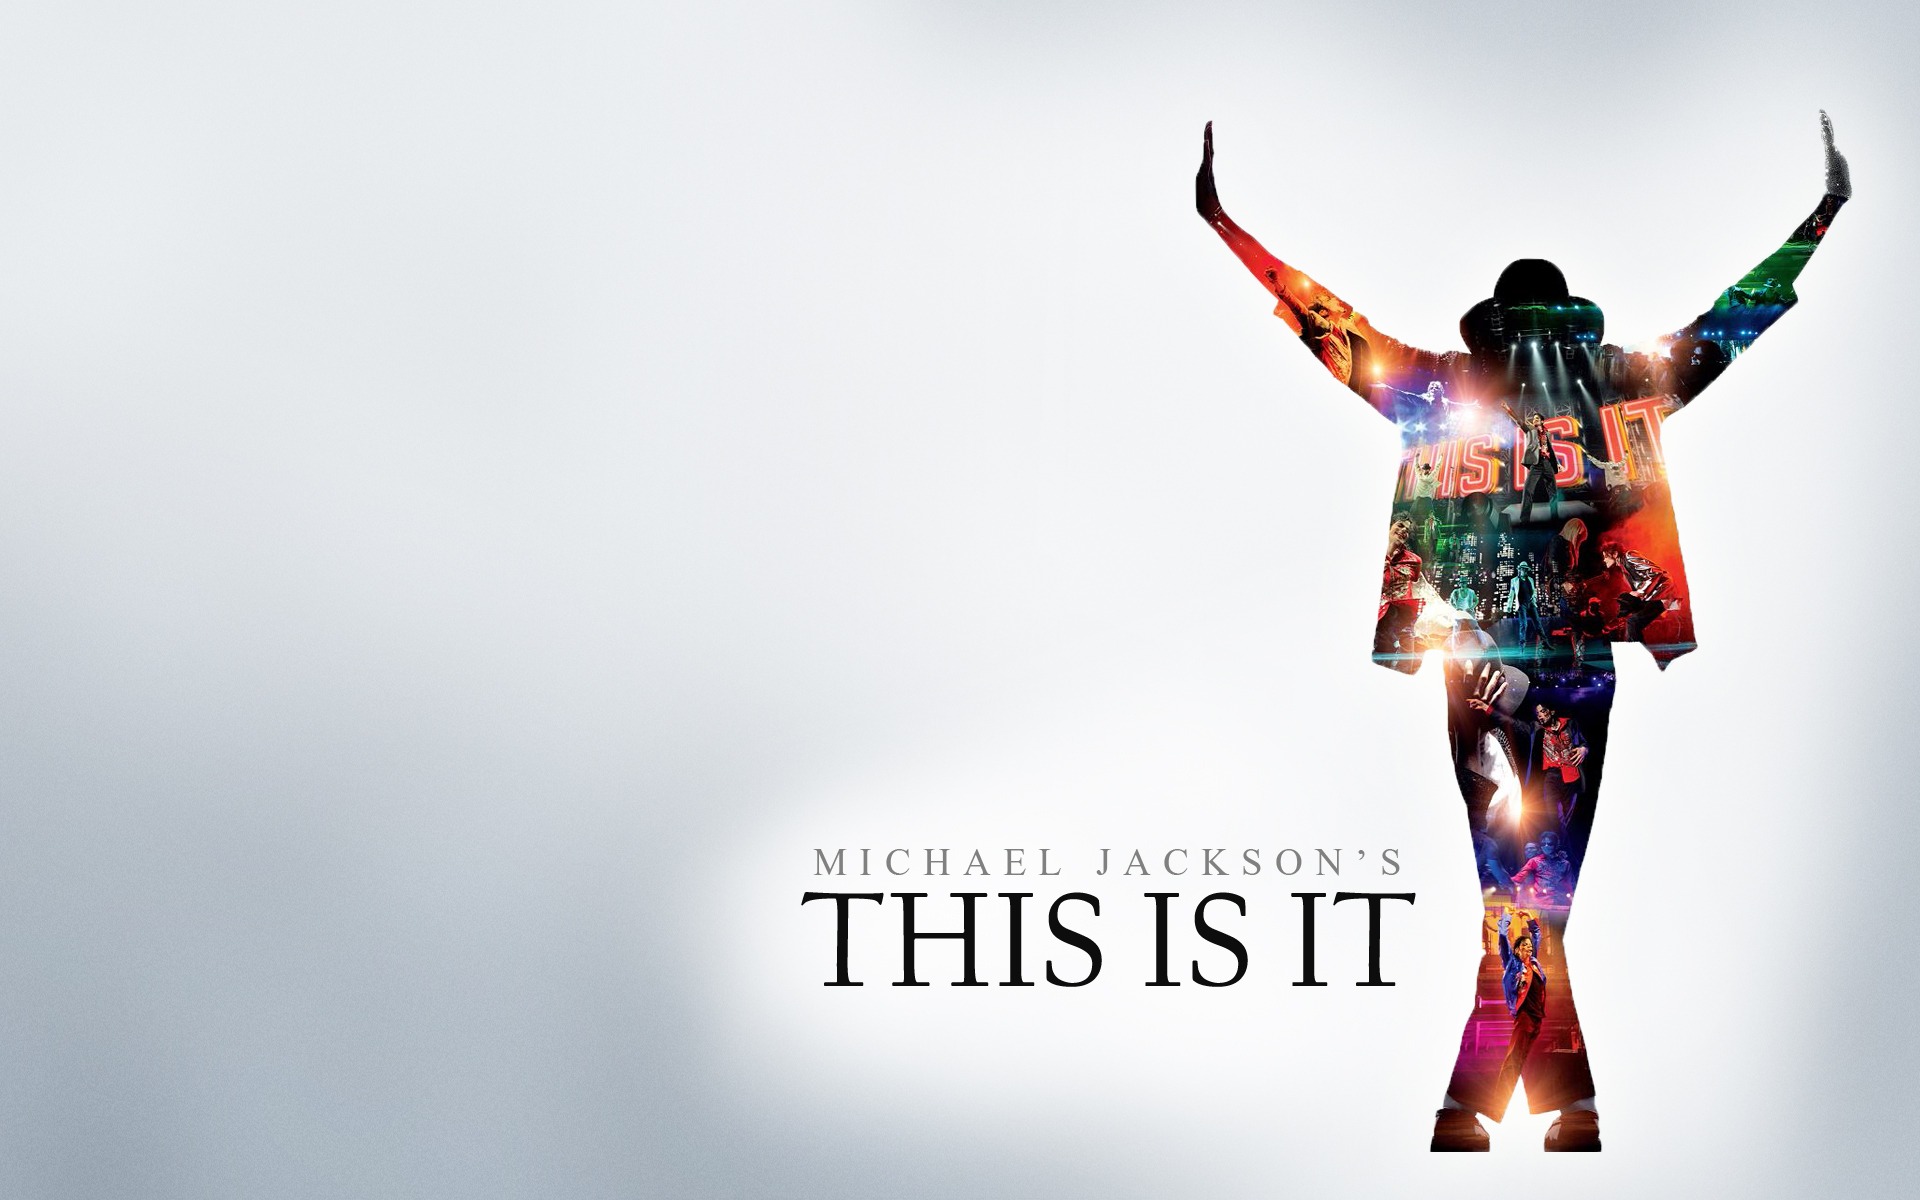 Michael Jackson wallpaper download - Windows 10 Wallpapers